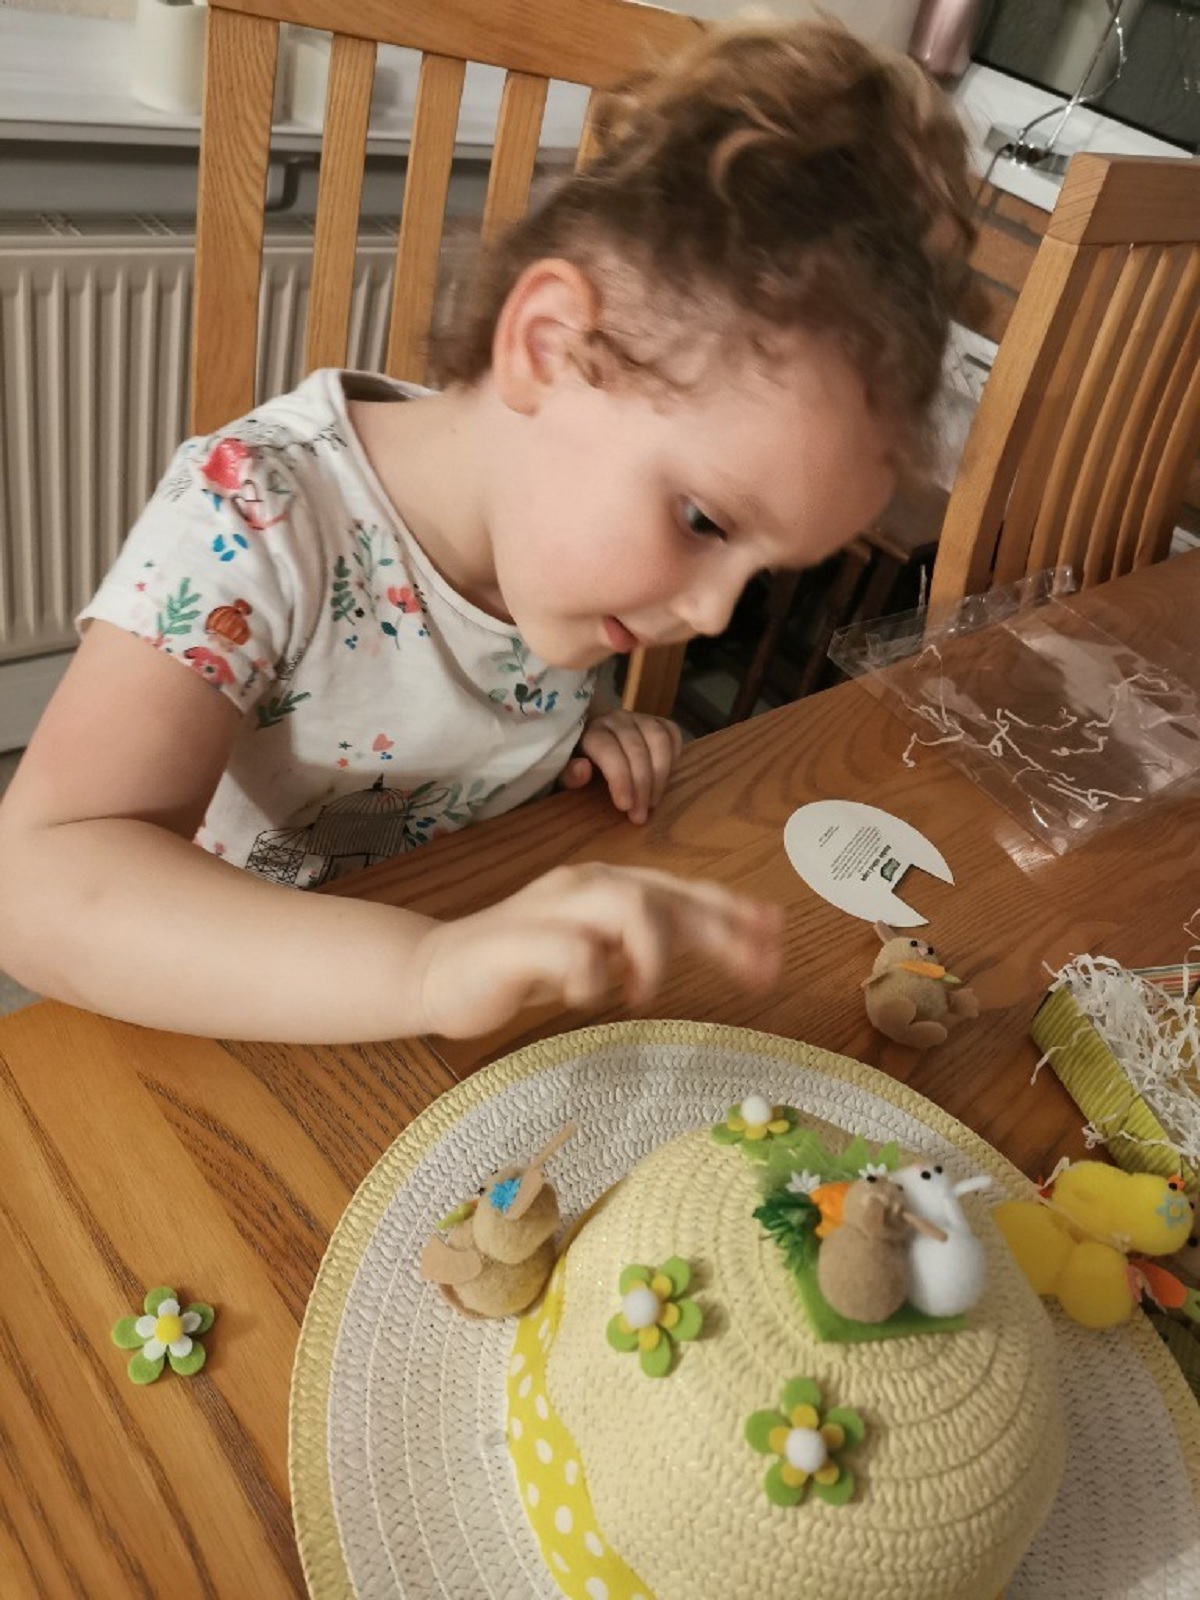 Sticking to her task - Isla Grace Gillet decorates her Easter bonnet